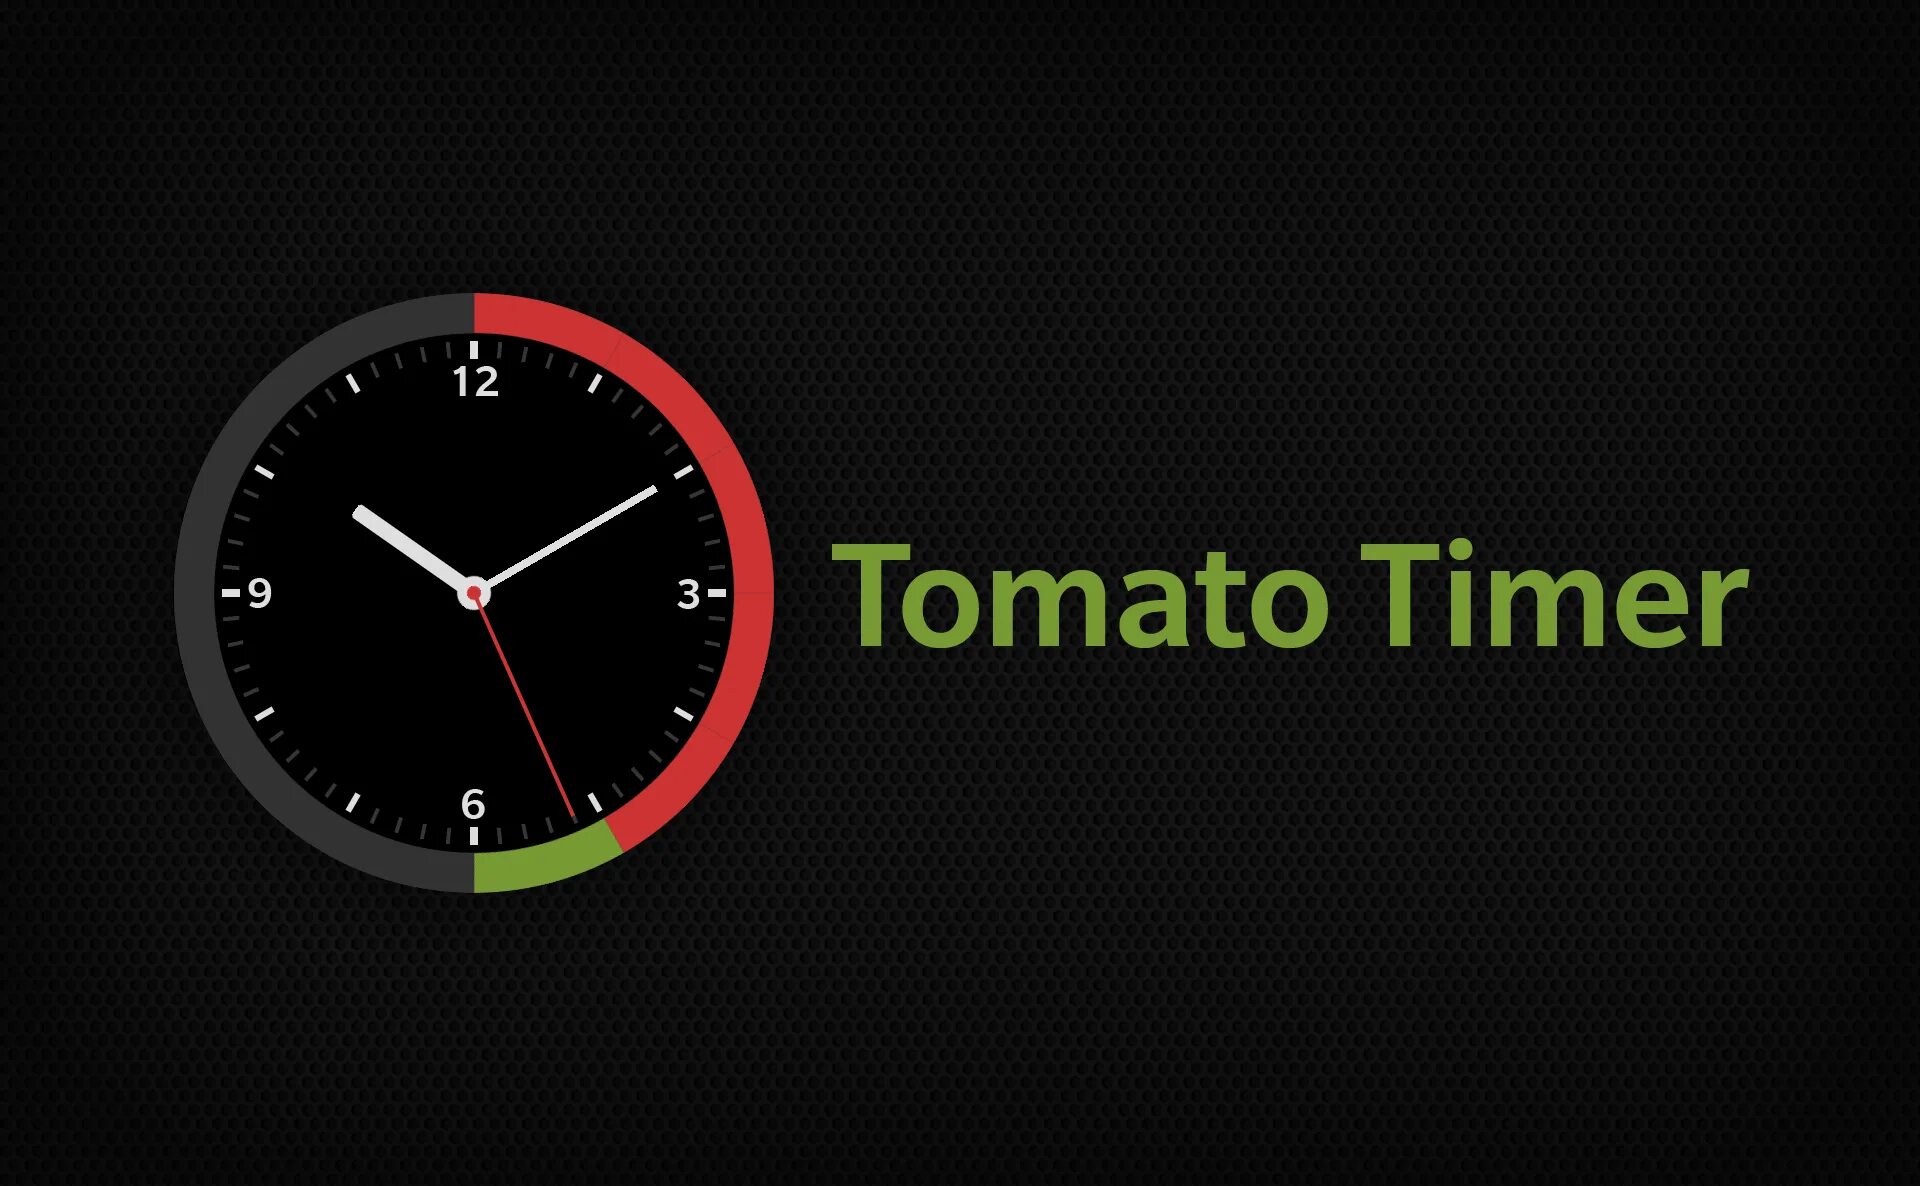 Поставь таймер 25 минут. Таймер. Tomato timer. Tomato timer приложение. Часы таймер менеджмент.